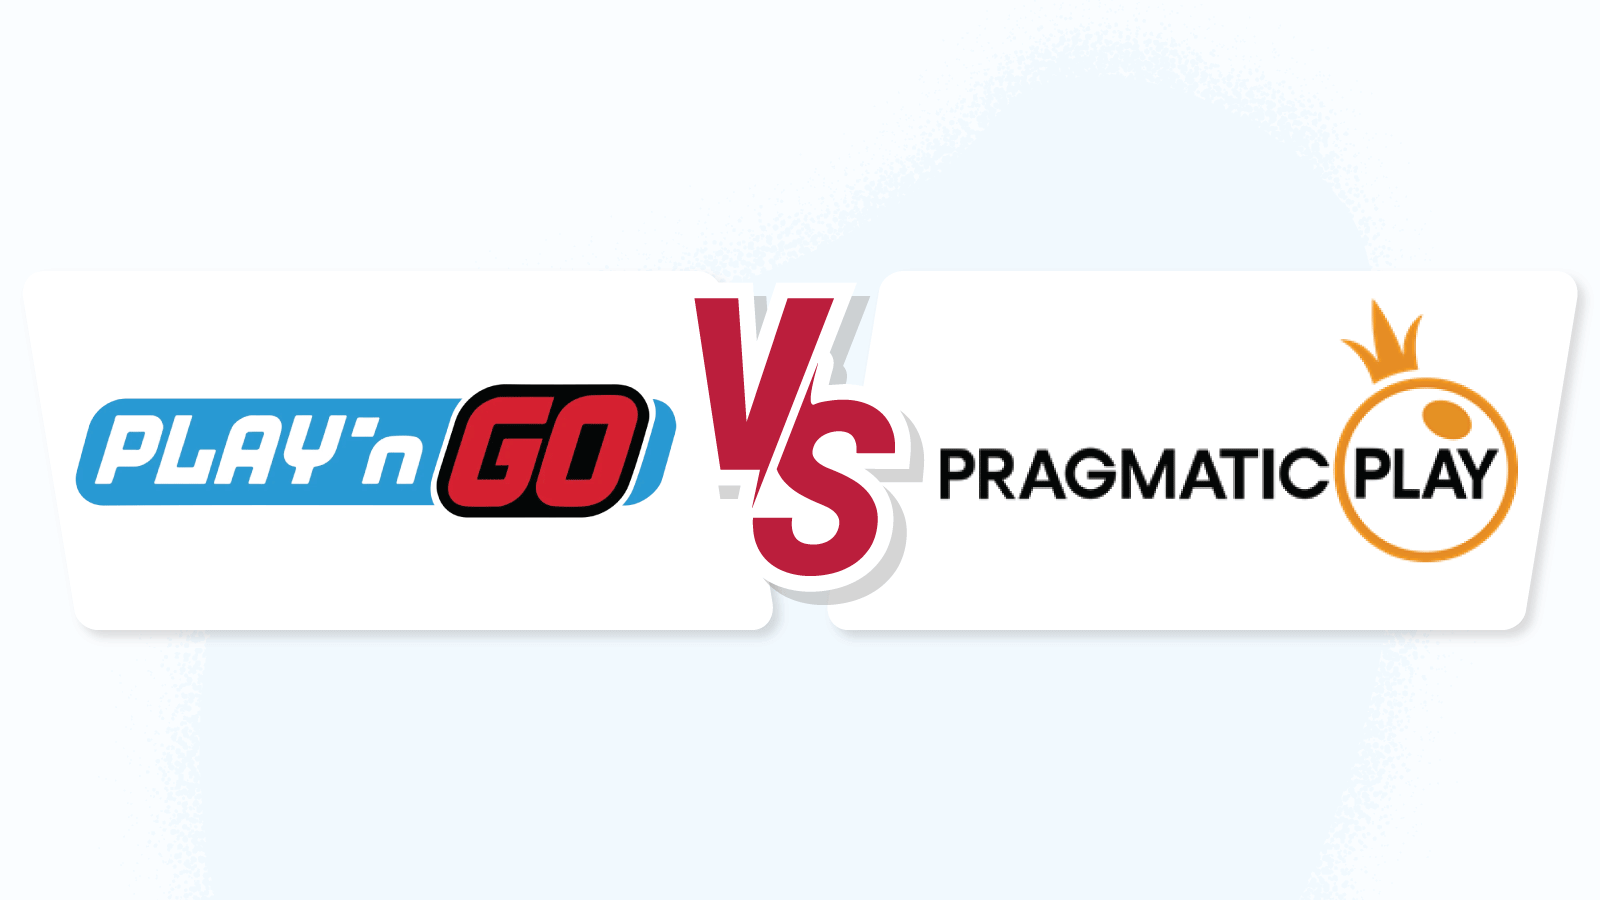 Play’n GO vs Pragmatic Play